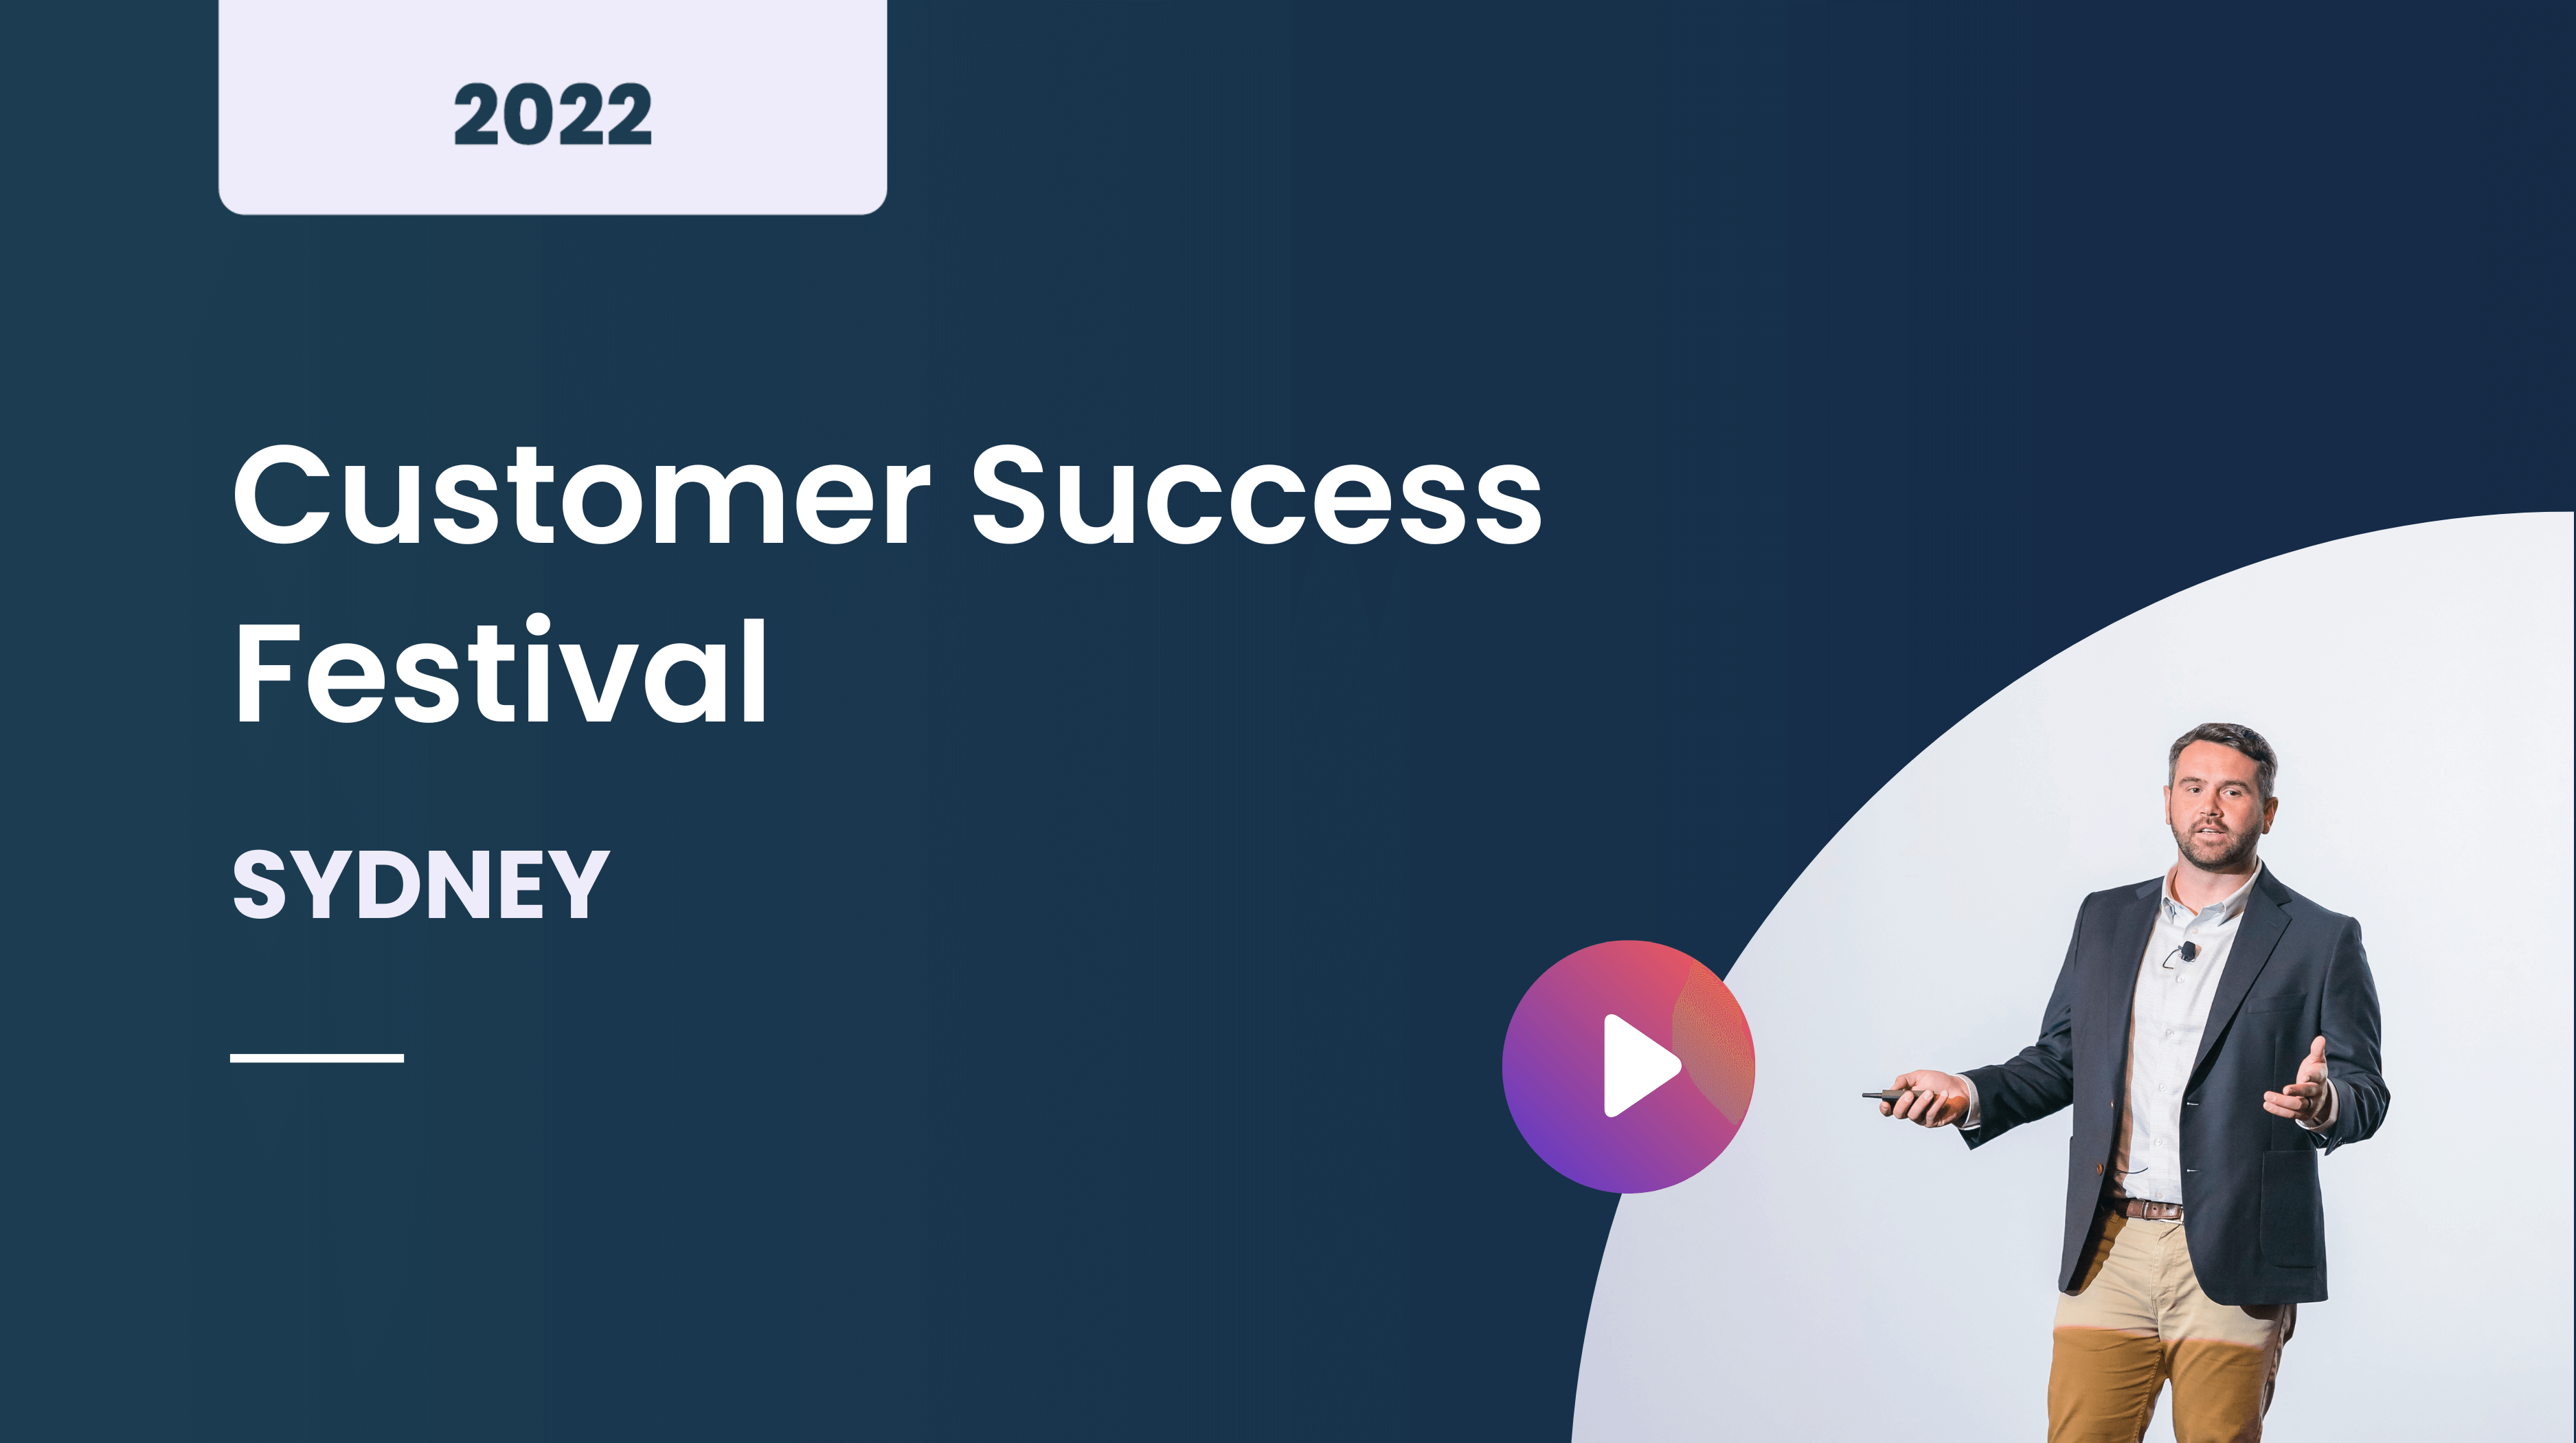 Customer Success Festival Sydney 2022